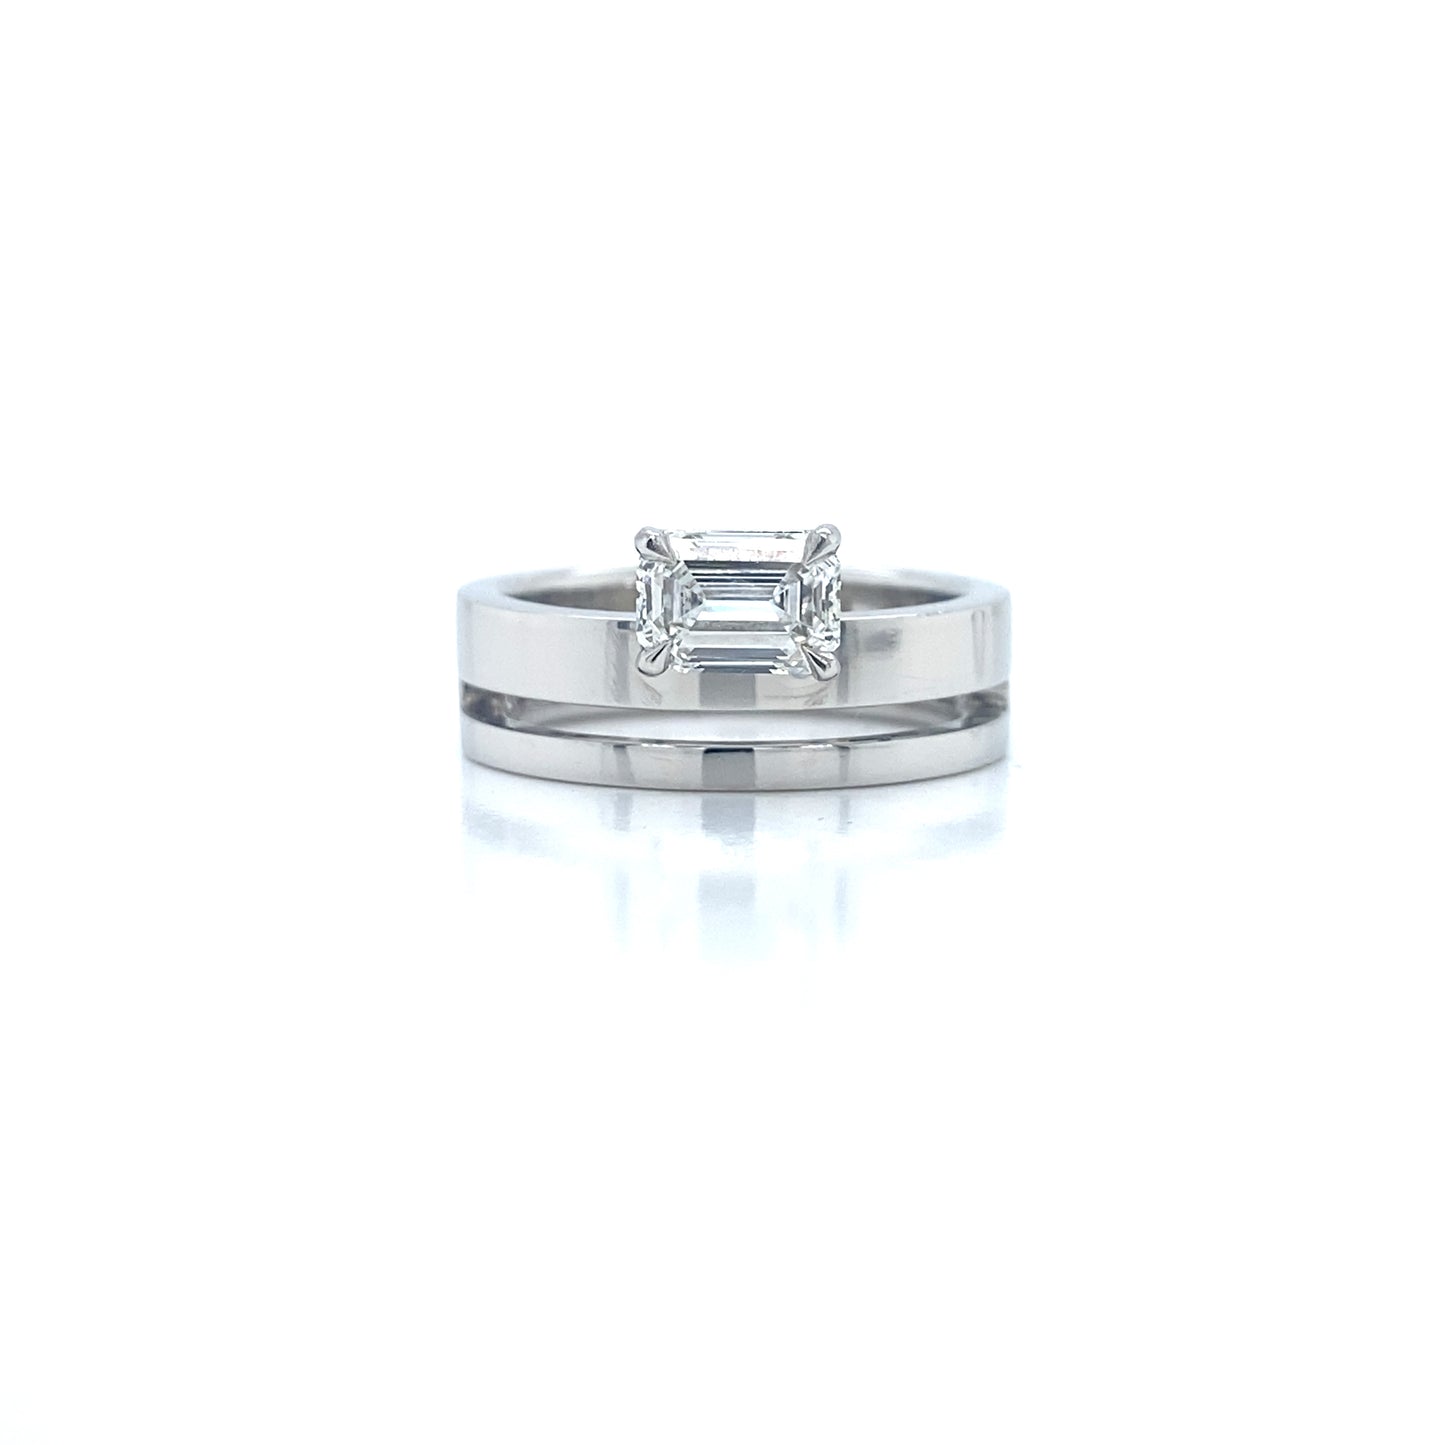 Platinum emerald cut diamond 'double band' ring